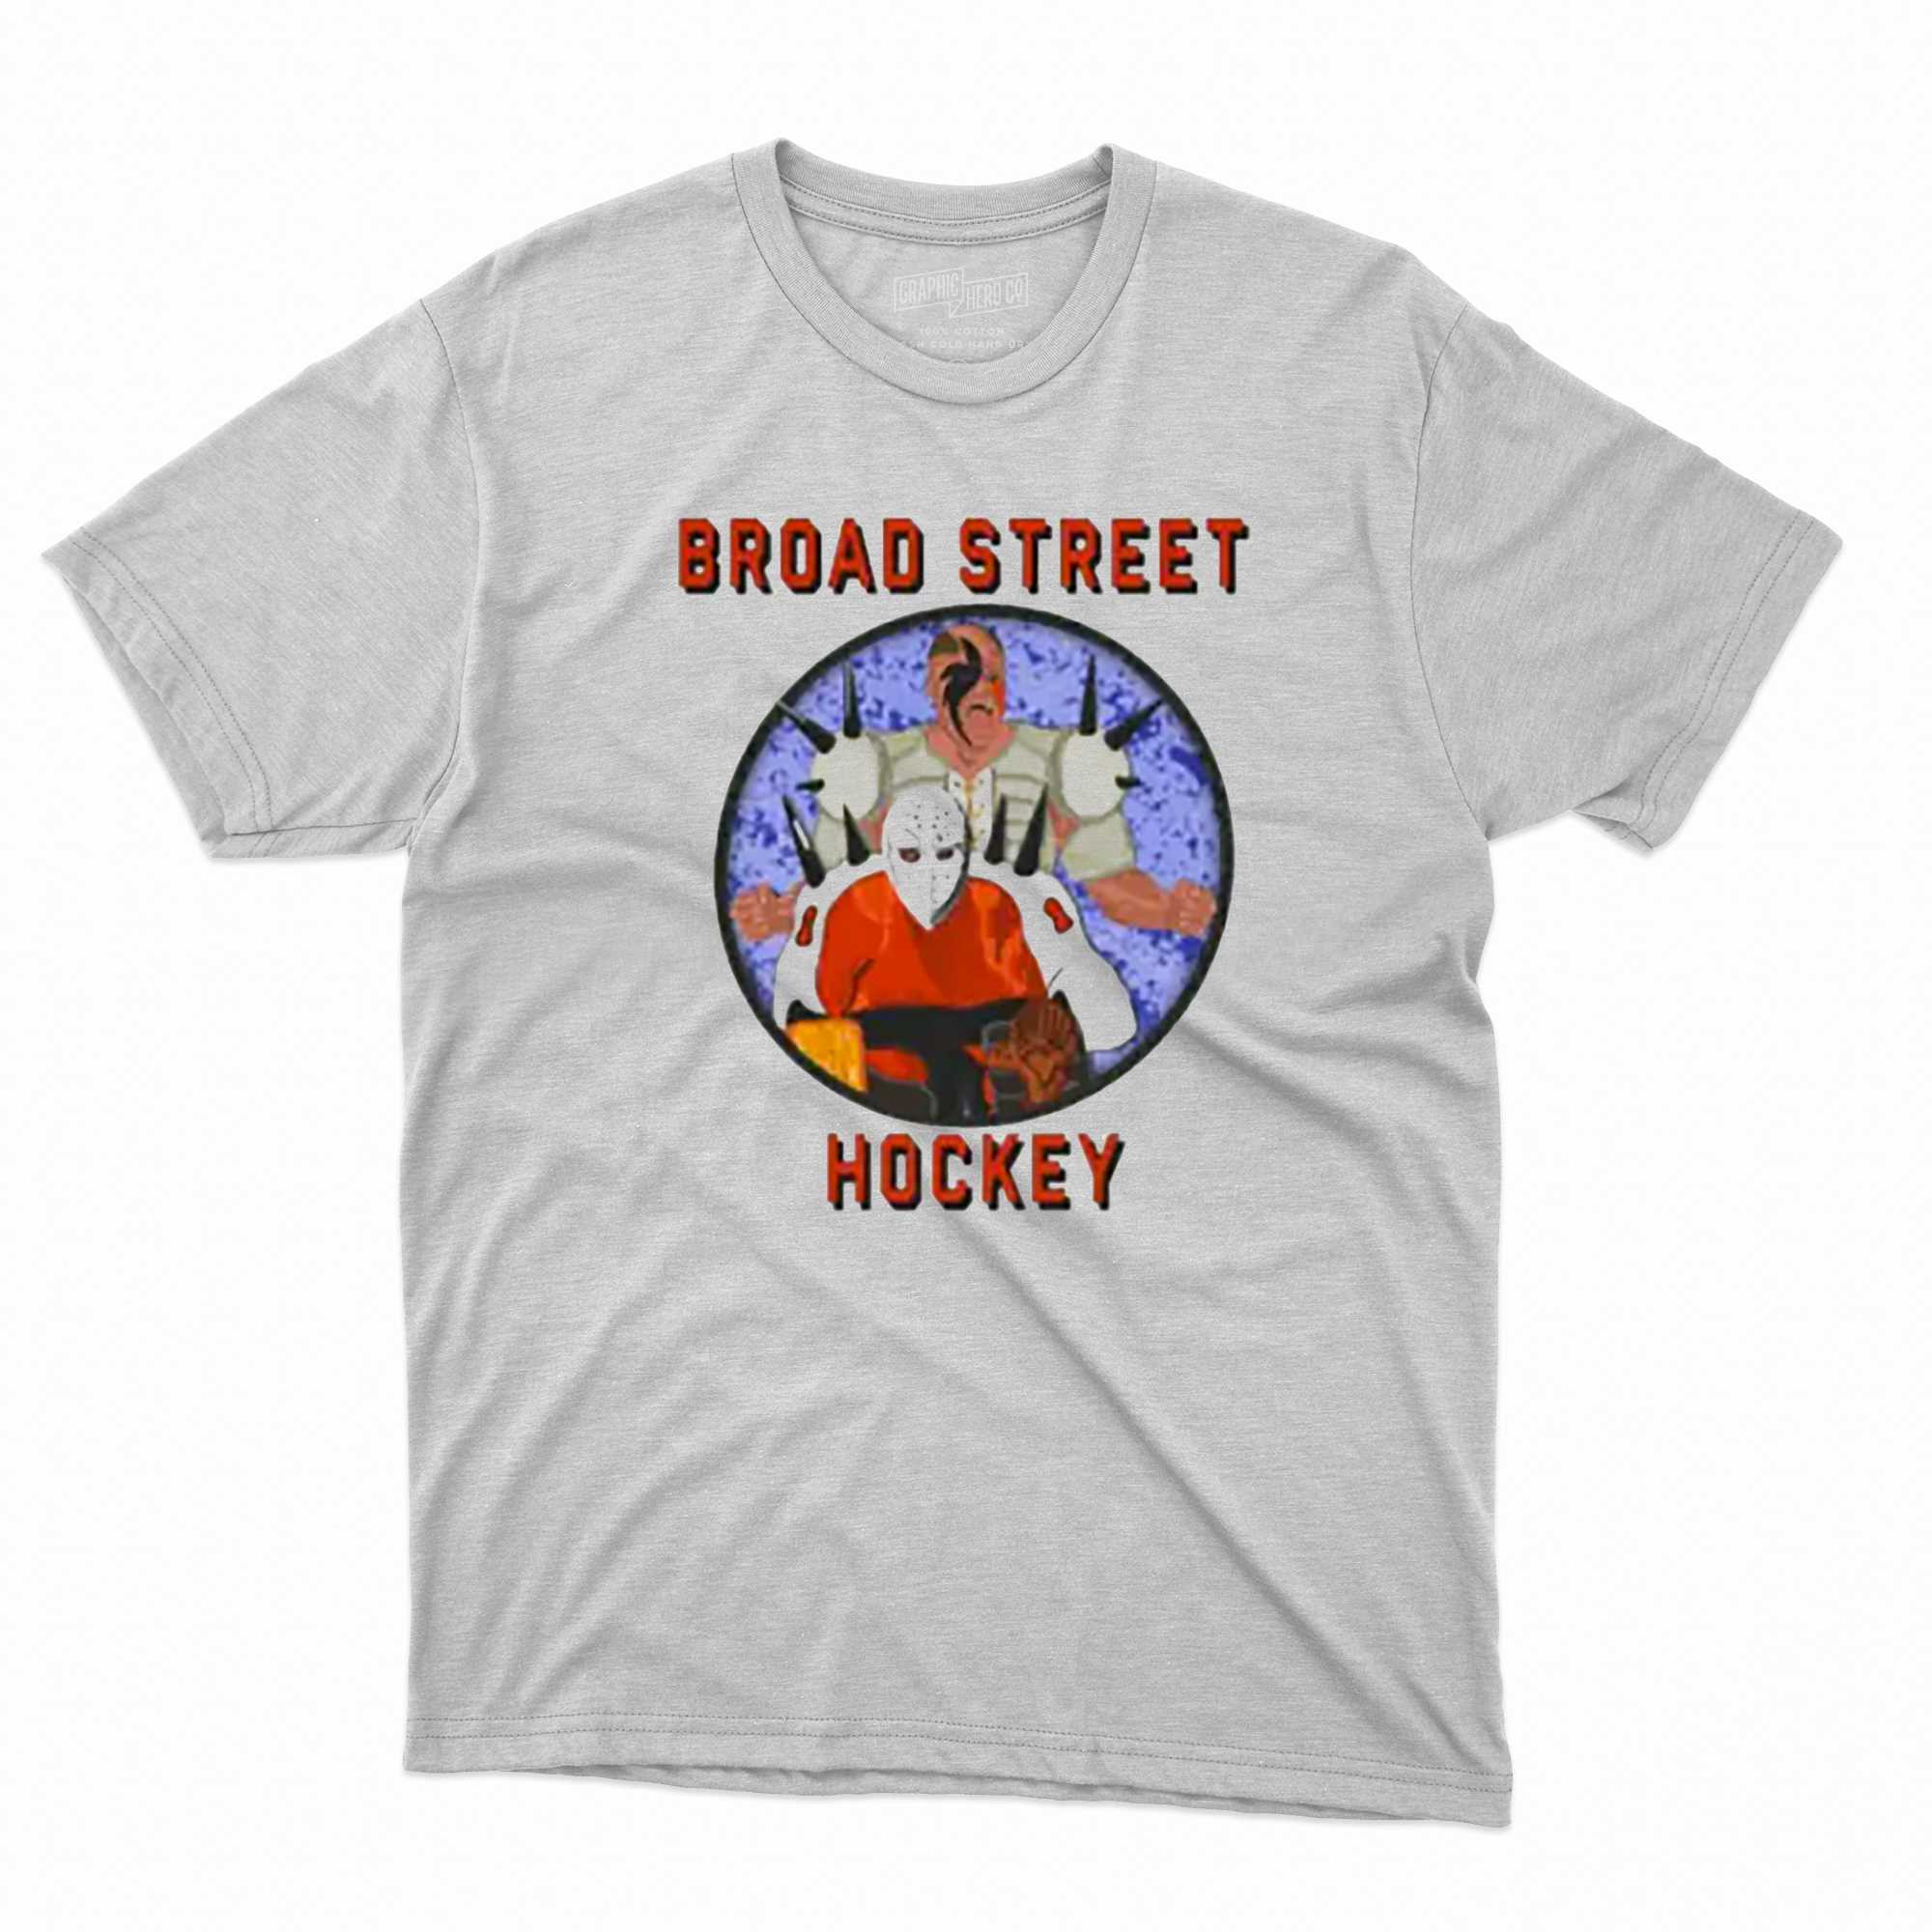 Philadelphia Flyers Merchandise, Jerseys, Apparel, Clothing